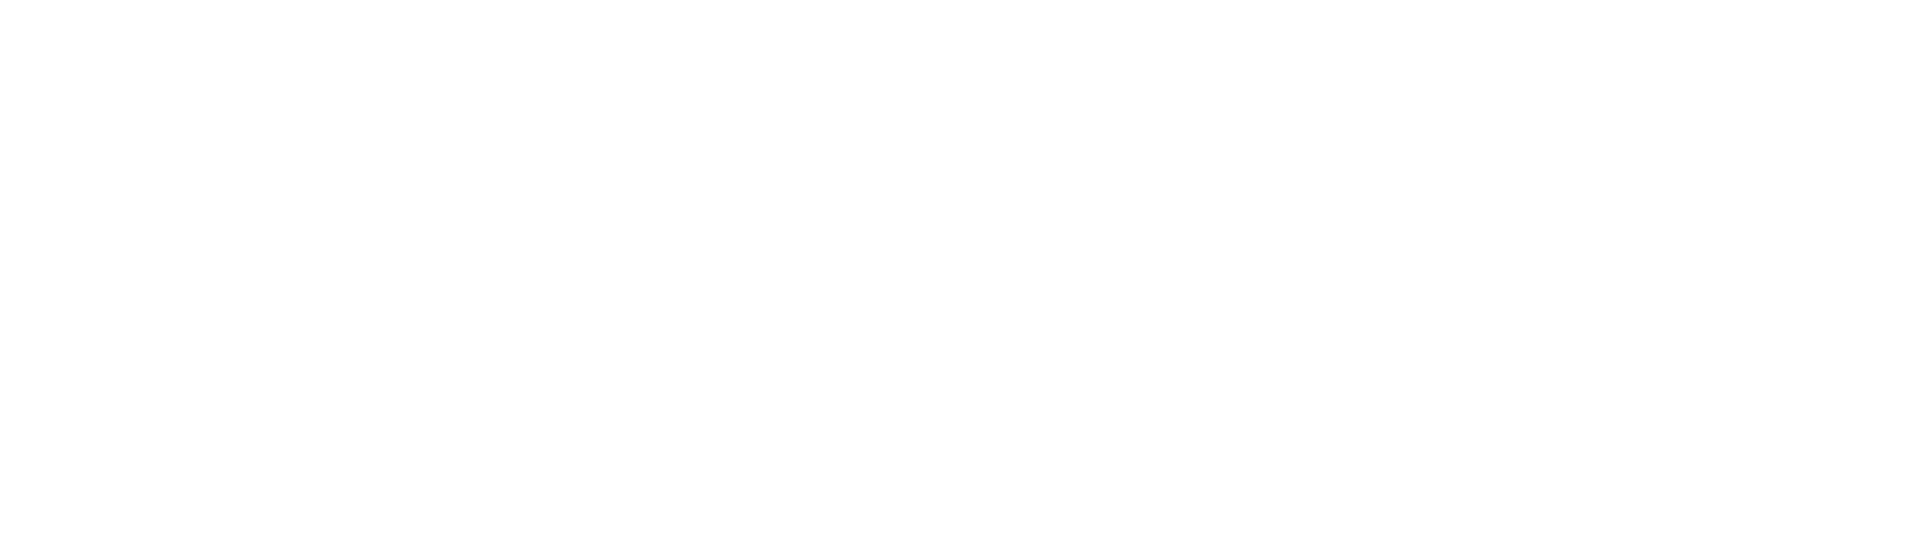 Logo-HuffPost-White.png